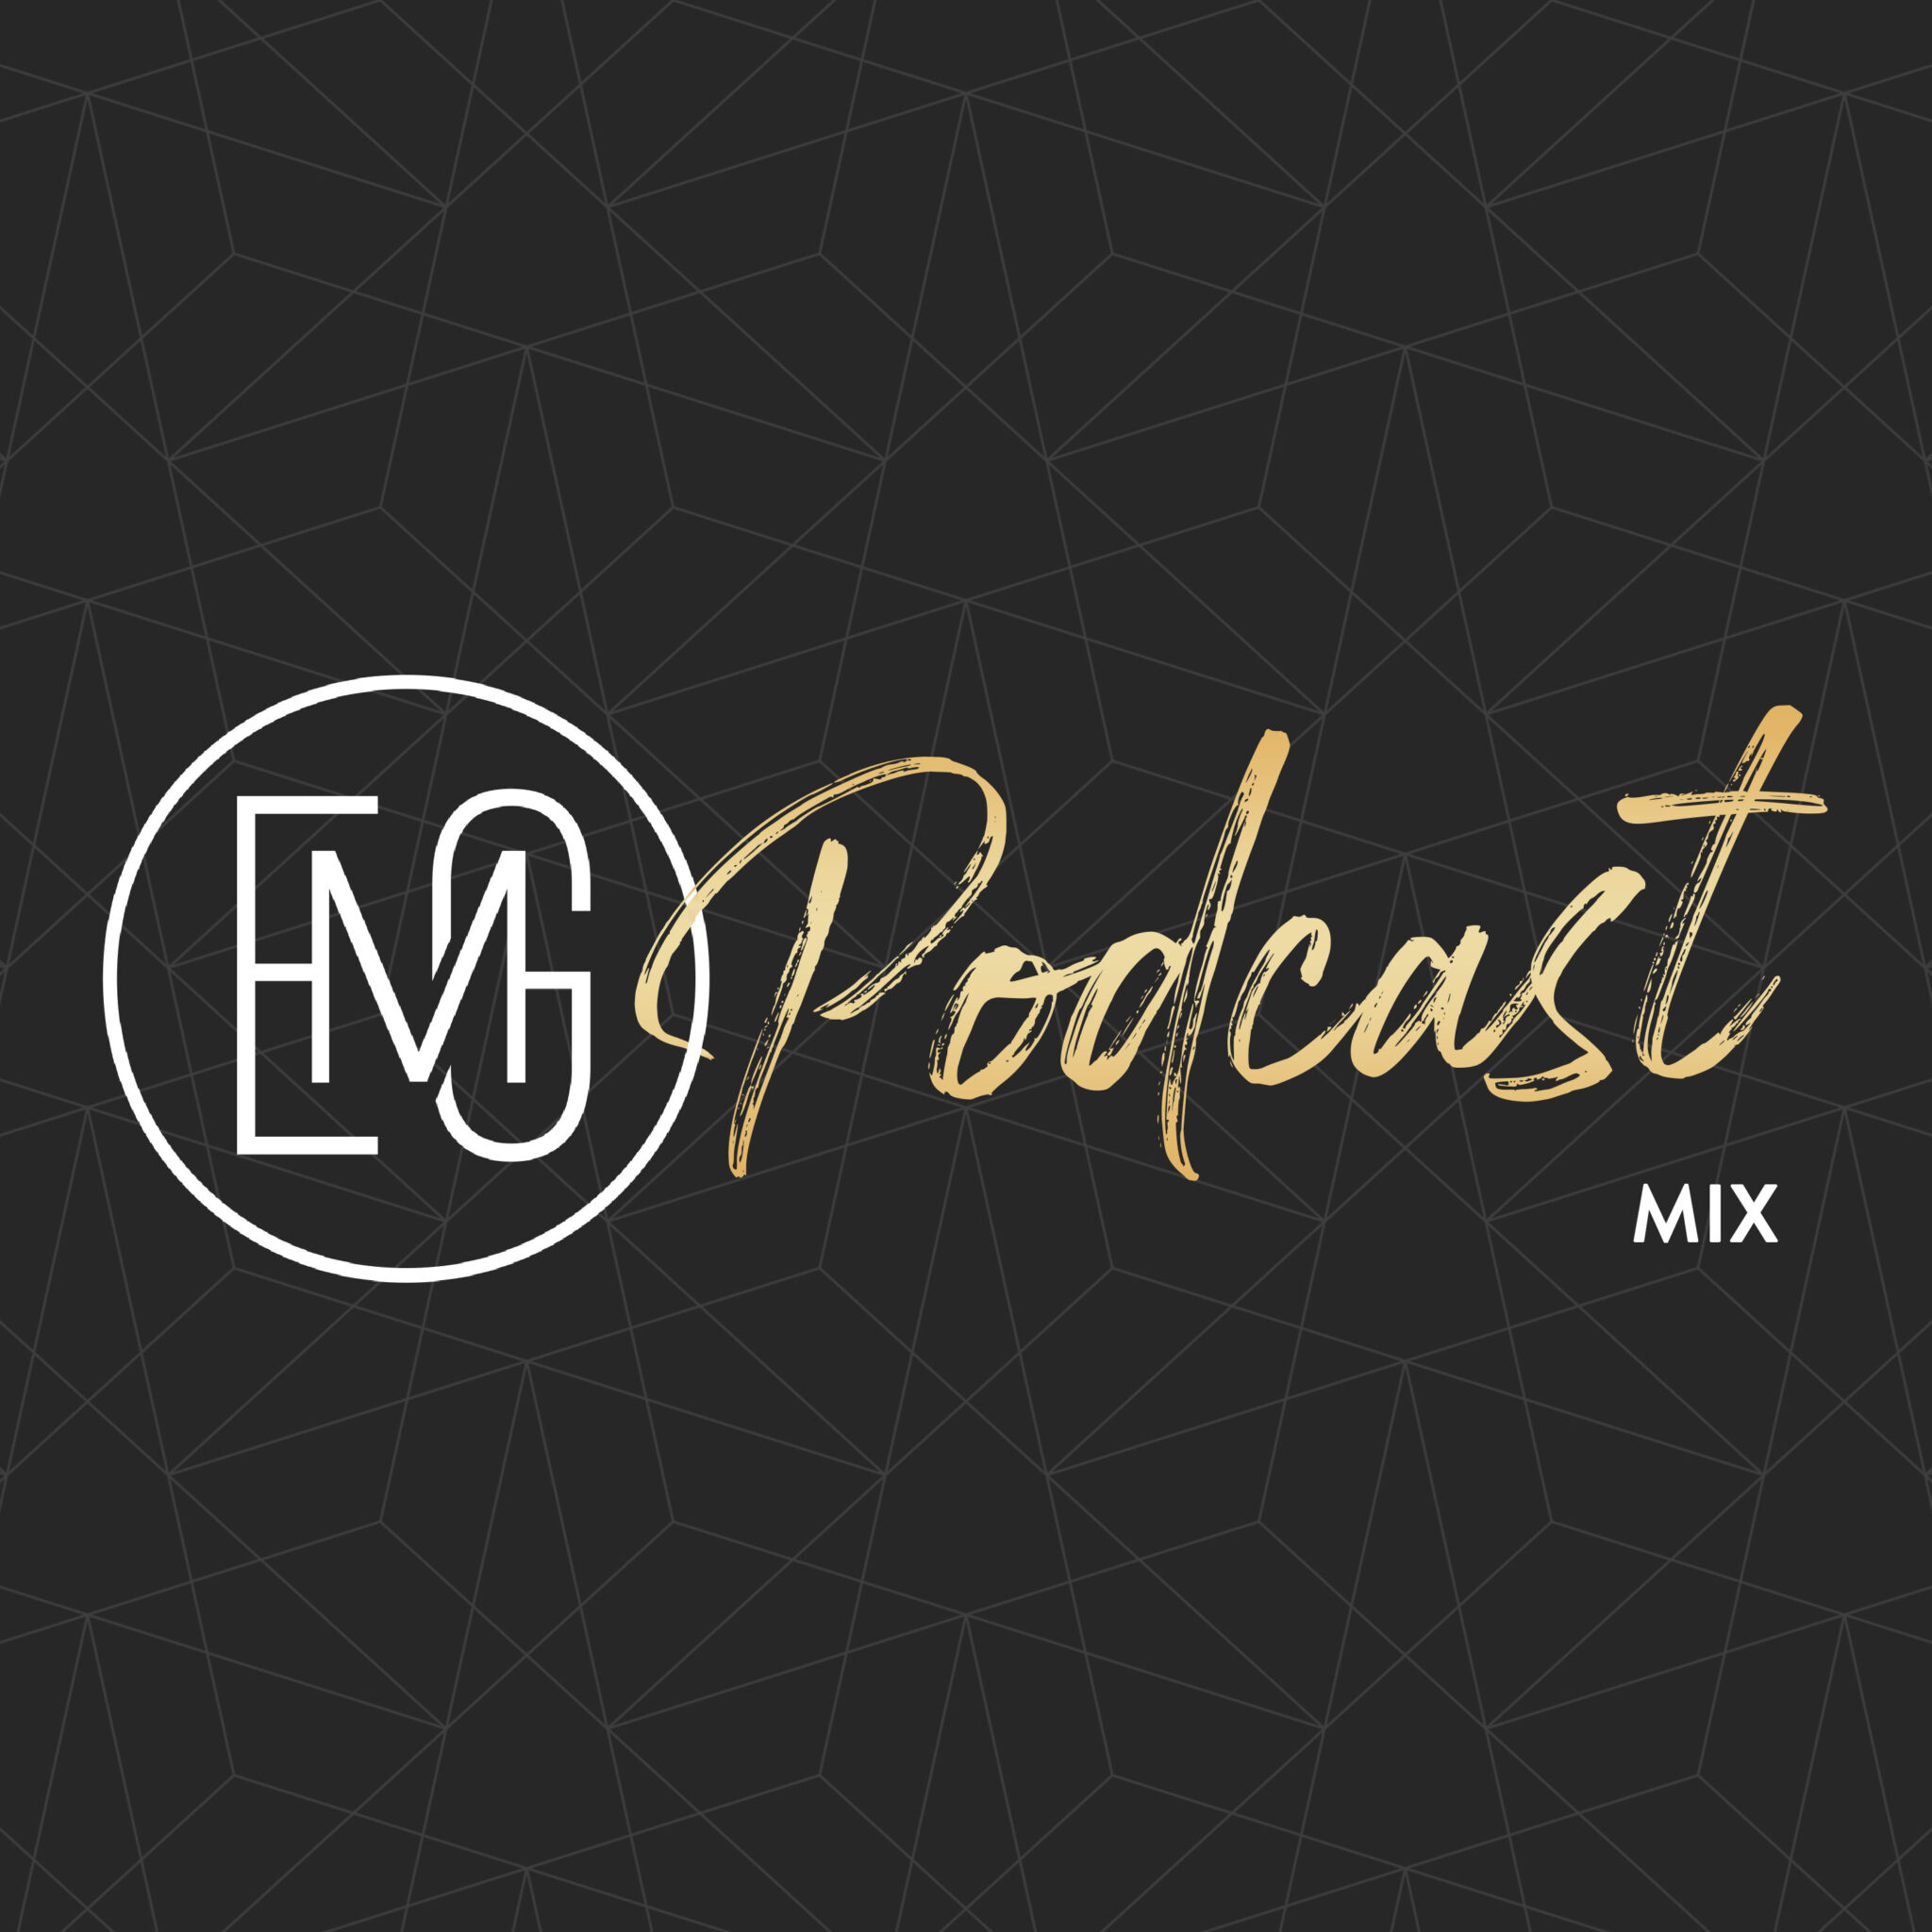 Mix: Corporate Mixer | Downtempo Top 40